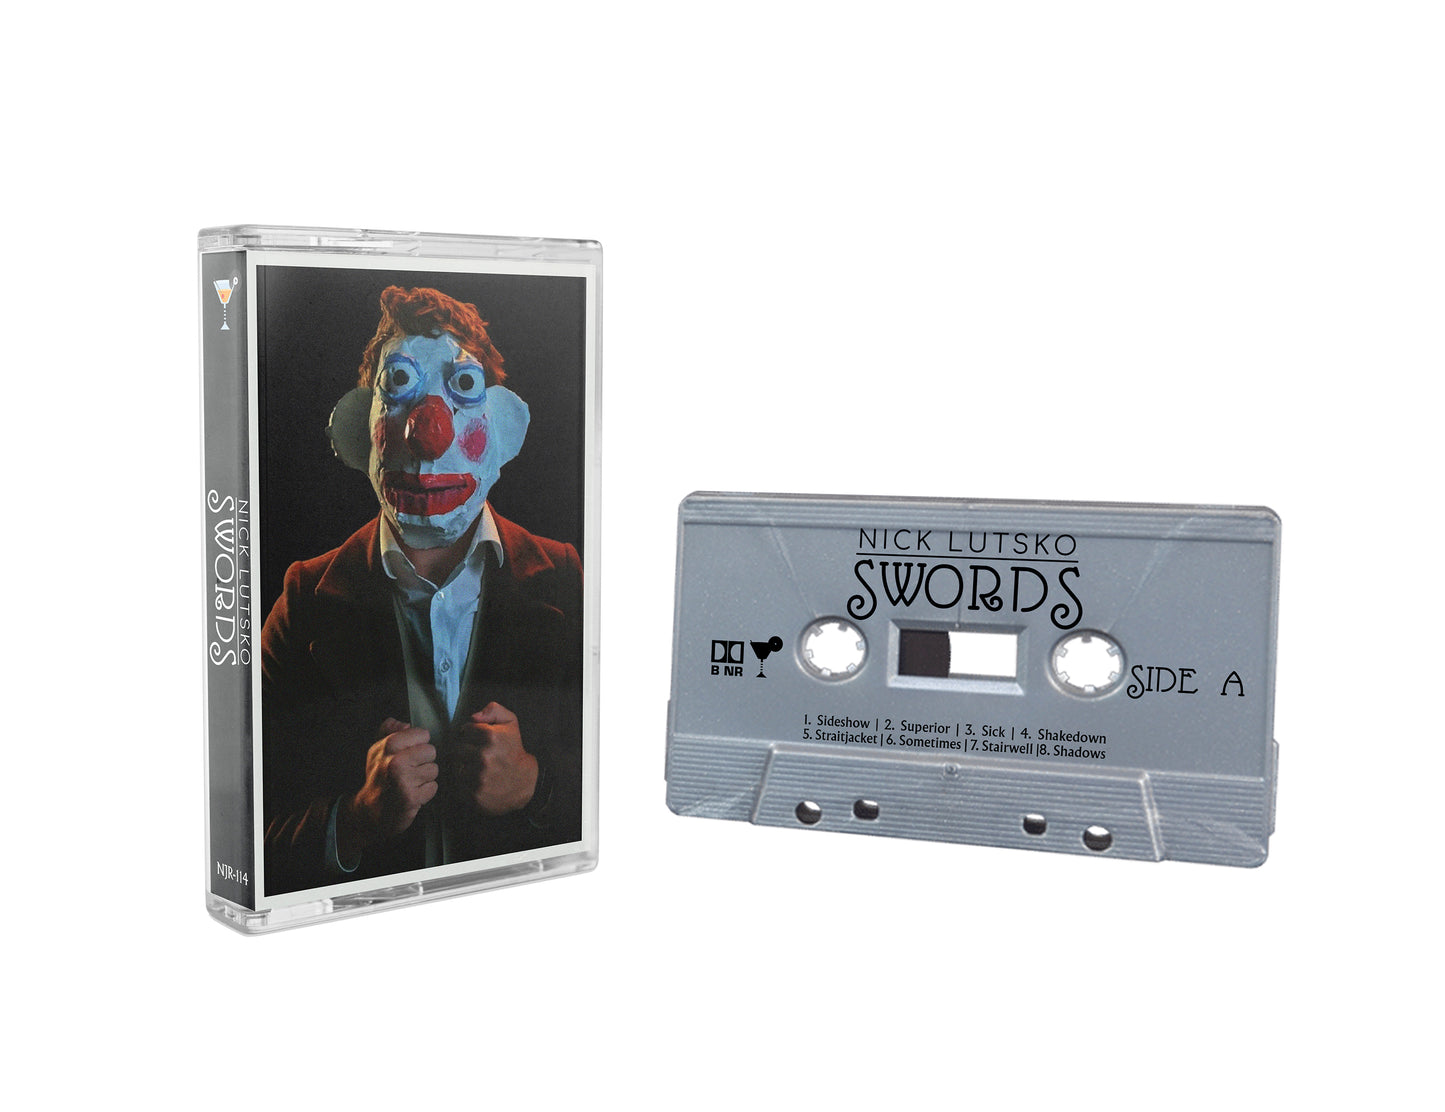 Swords - Shoddy Vintage Cassette